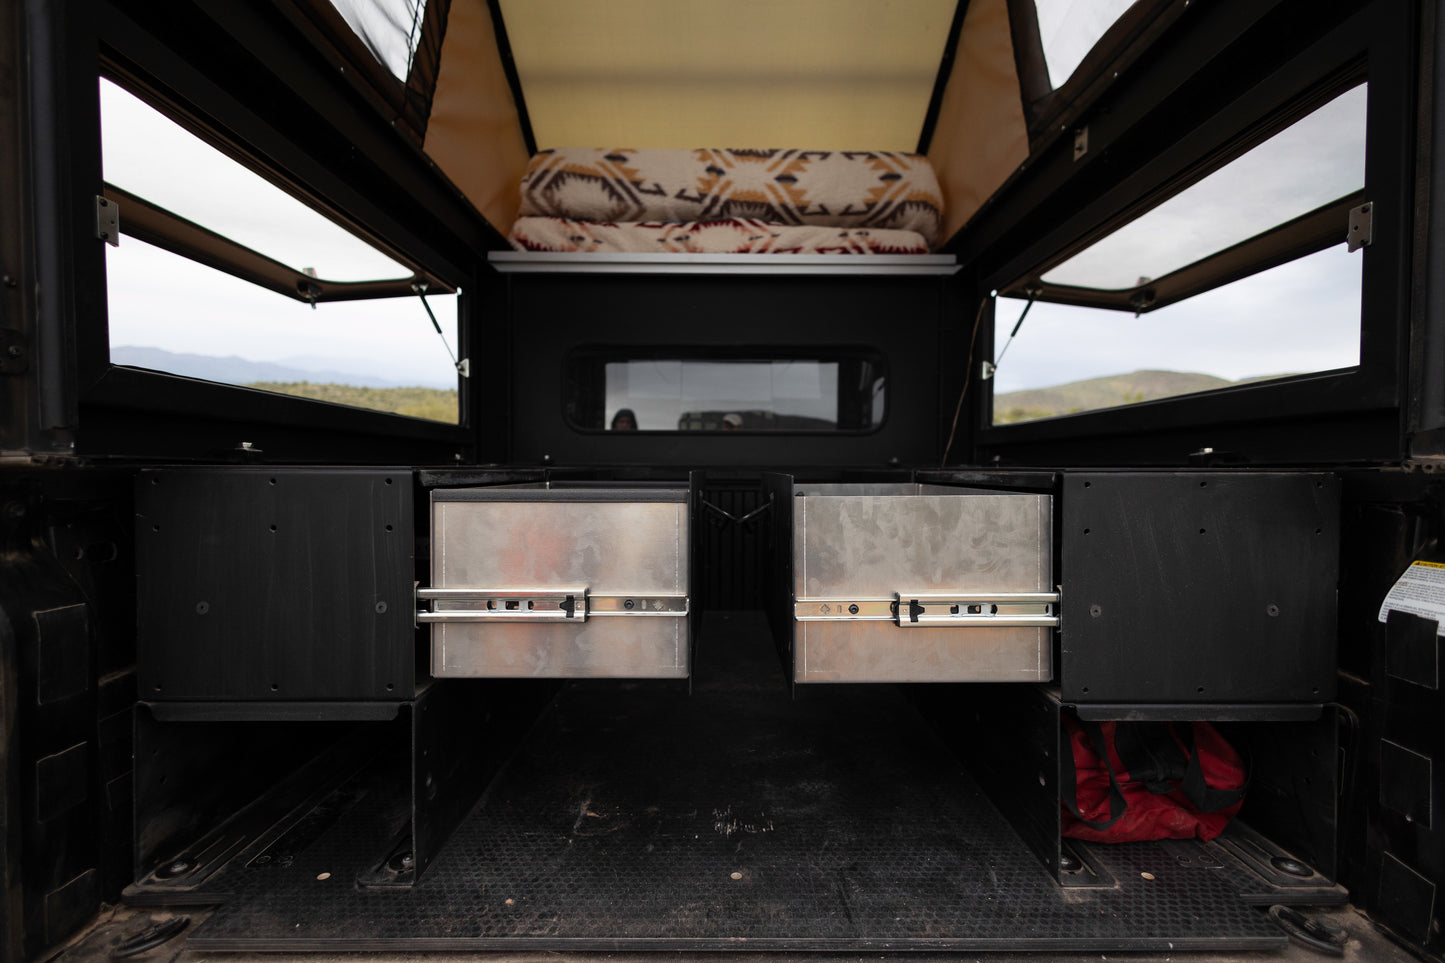 Fullsize 8ft Truck Camper Interior